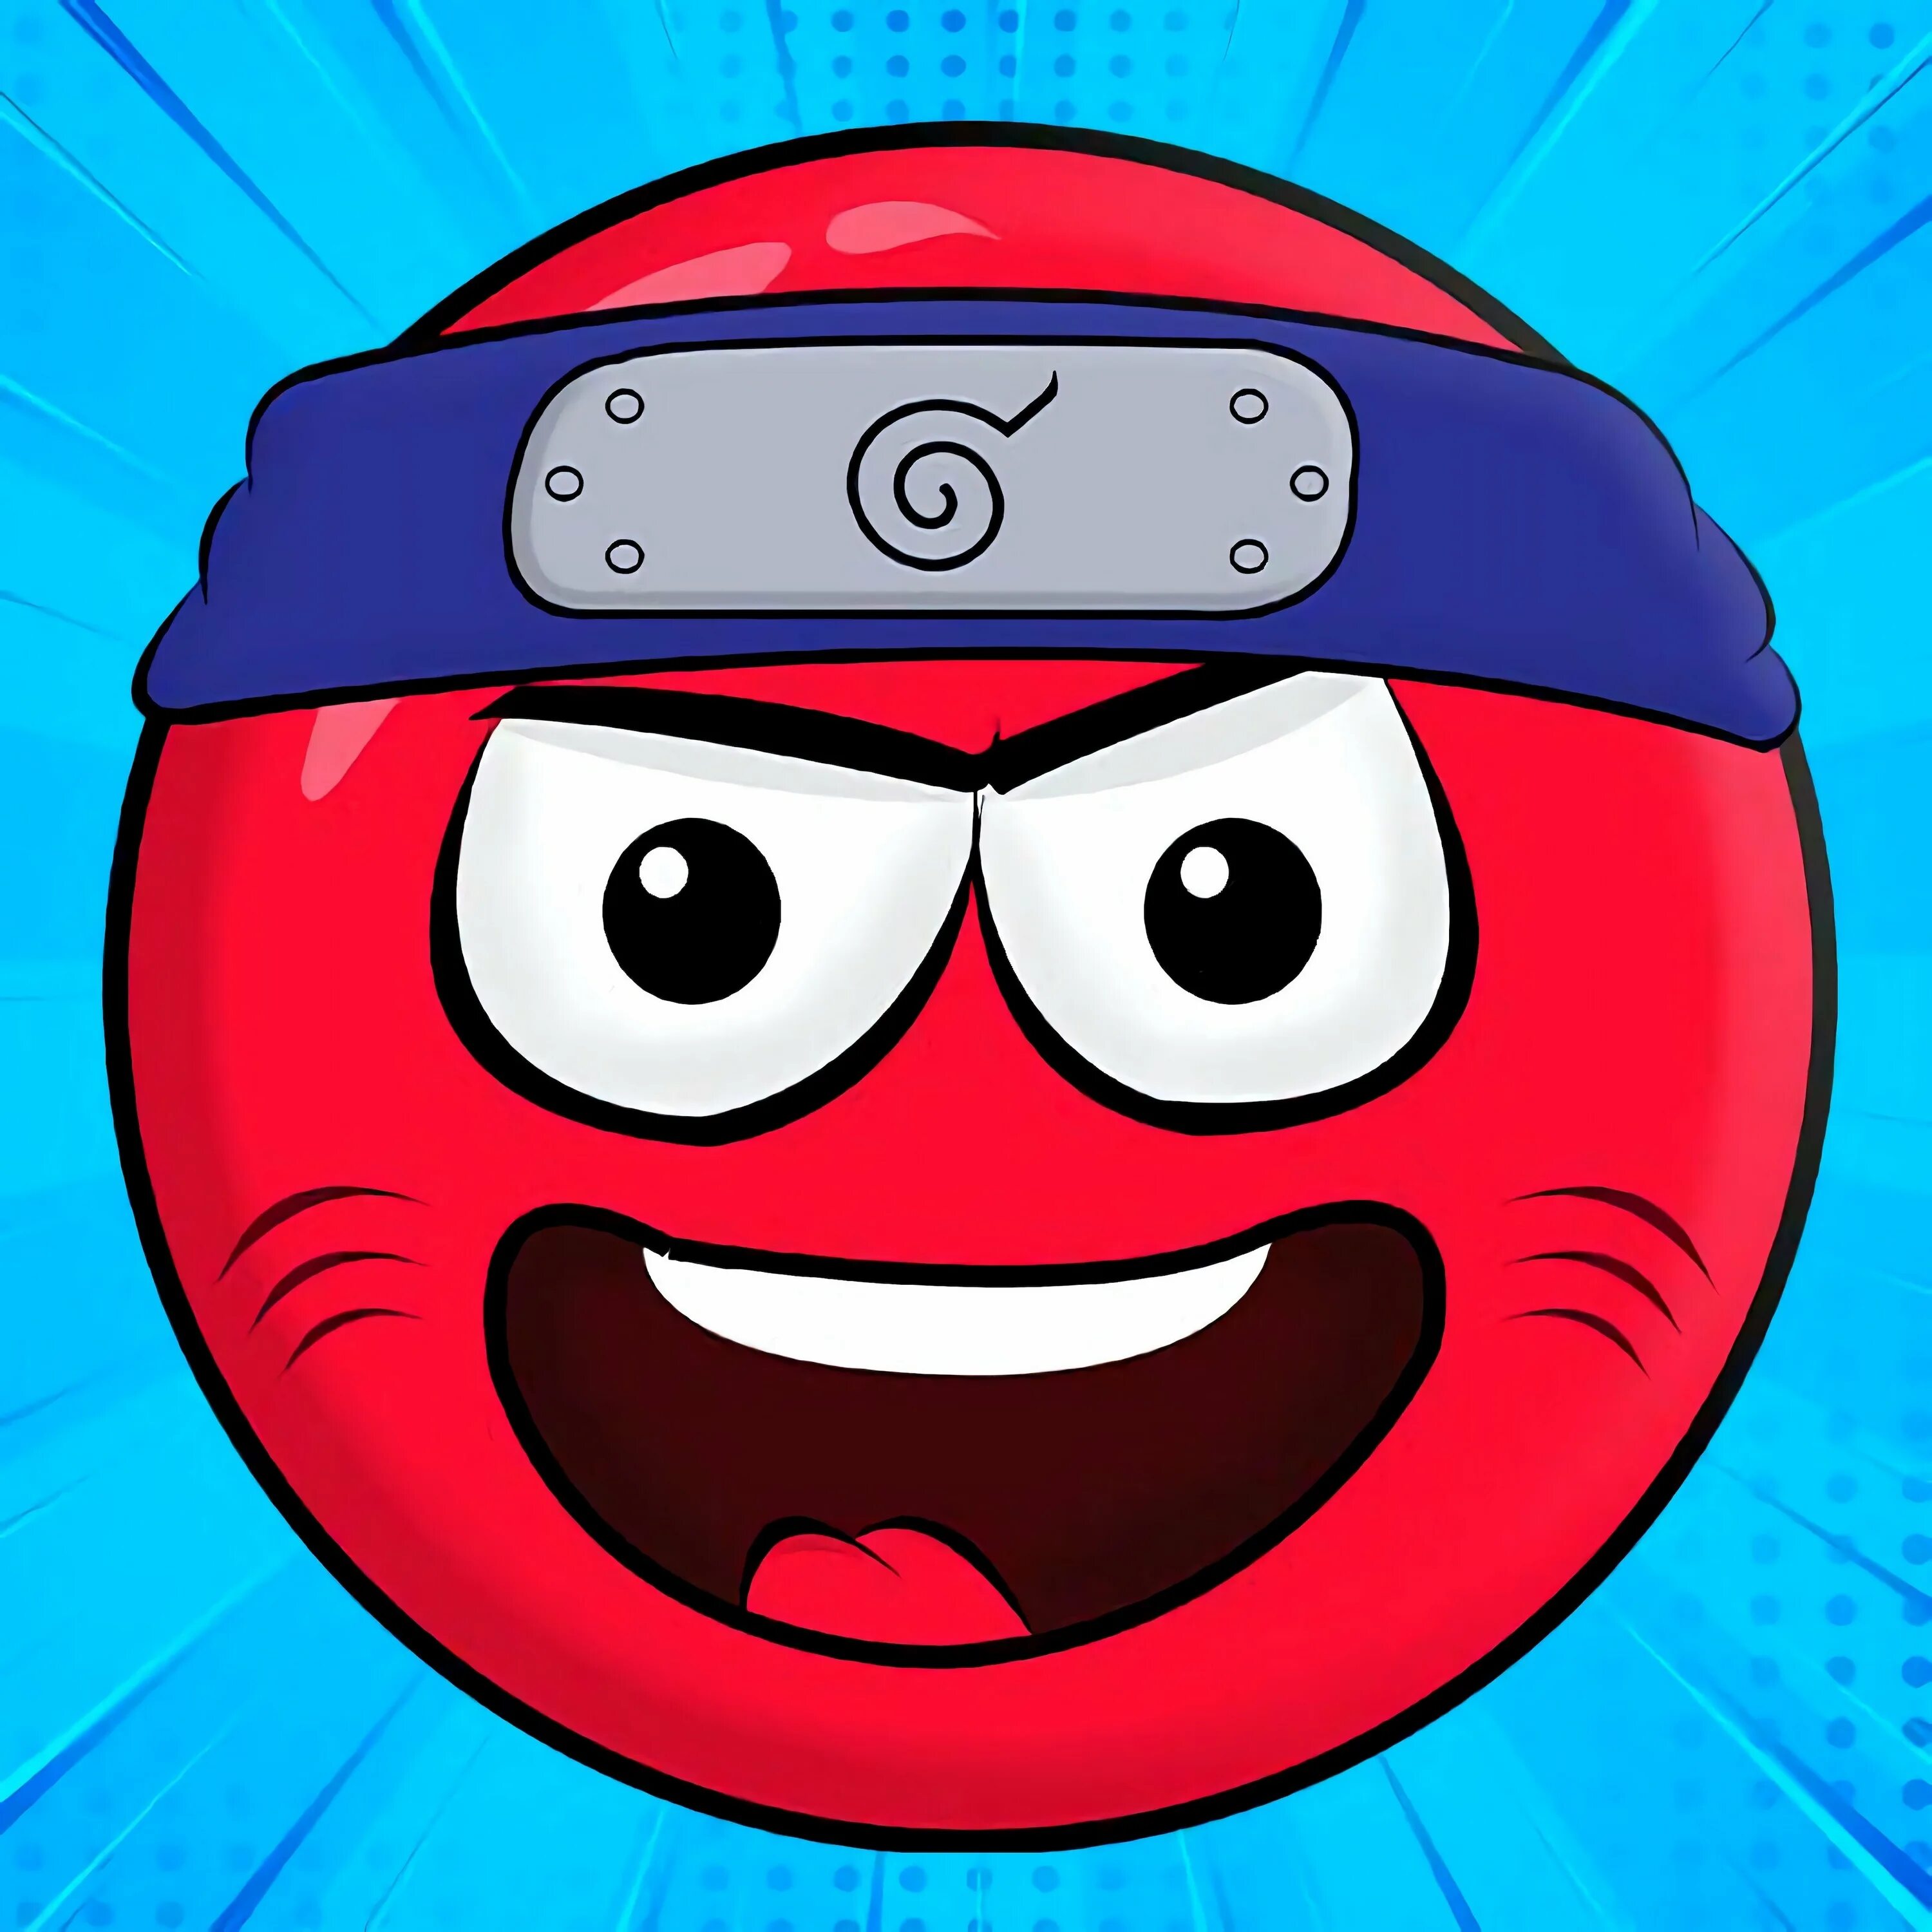 Ред болл игра. Игра Red Ball 4. Красный шар ред бол 4. Red Ball Adventure игра. Ball Hero Adventure: Red Bounce Ball.